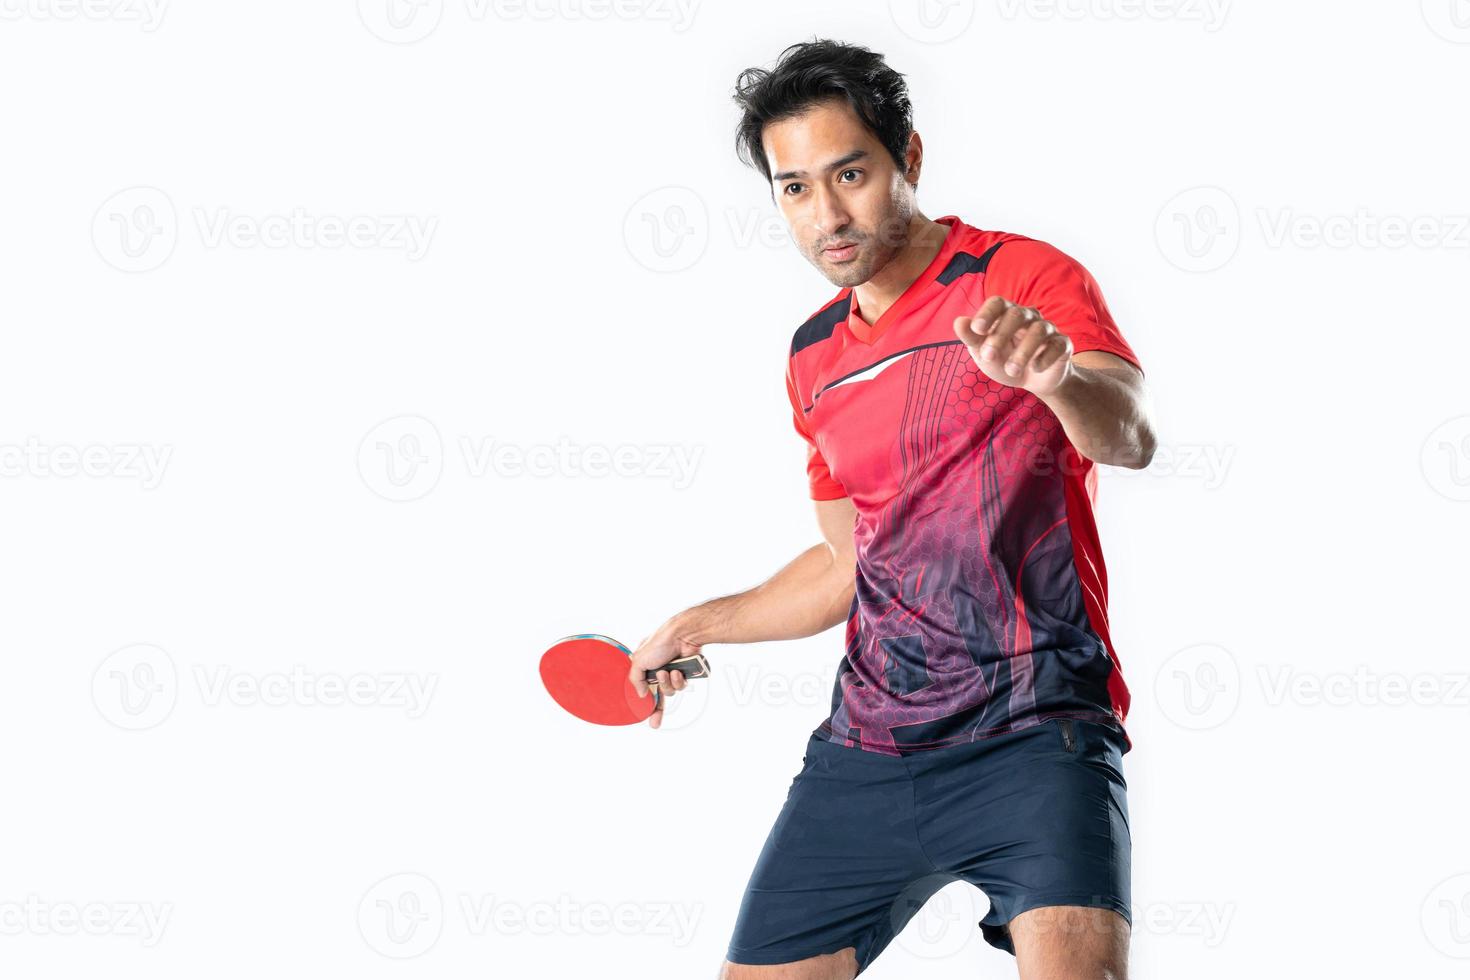 retrato de deportista atleta masculino jugando tenis de mesa aislado. foto